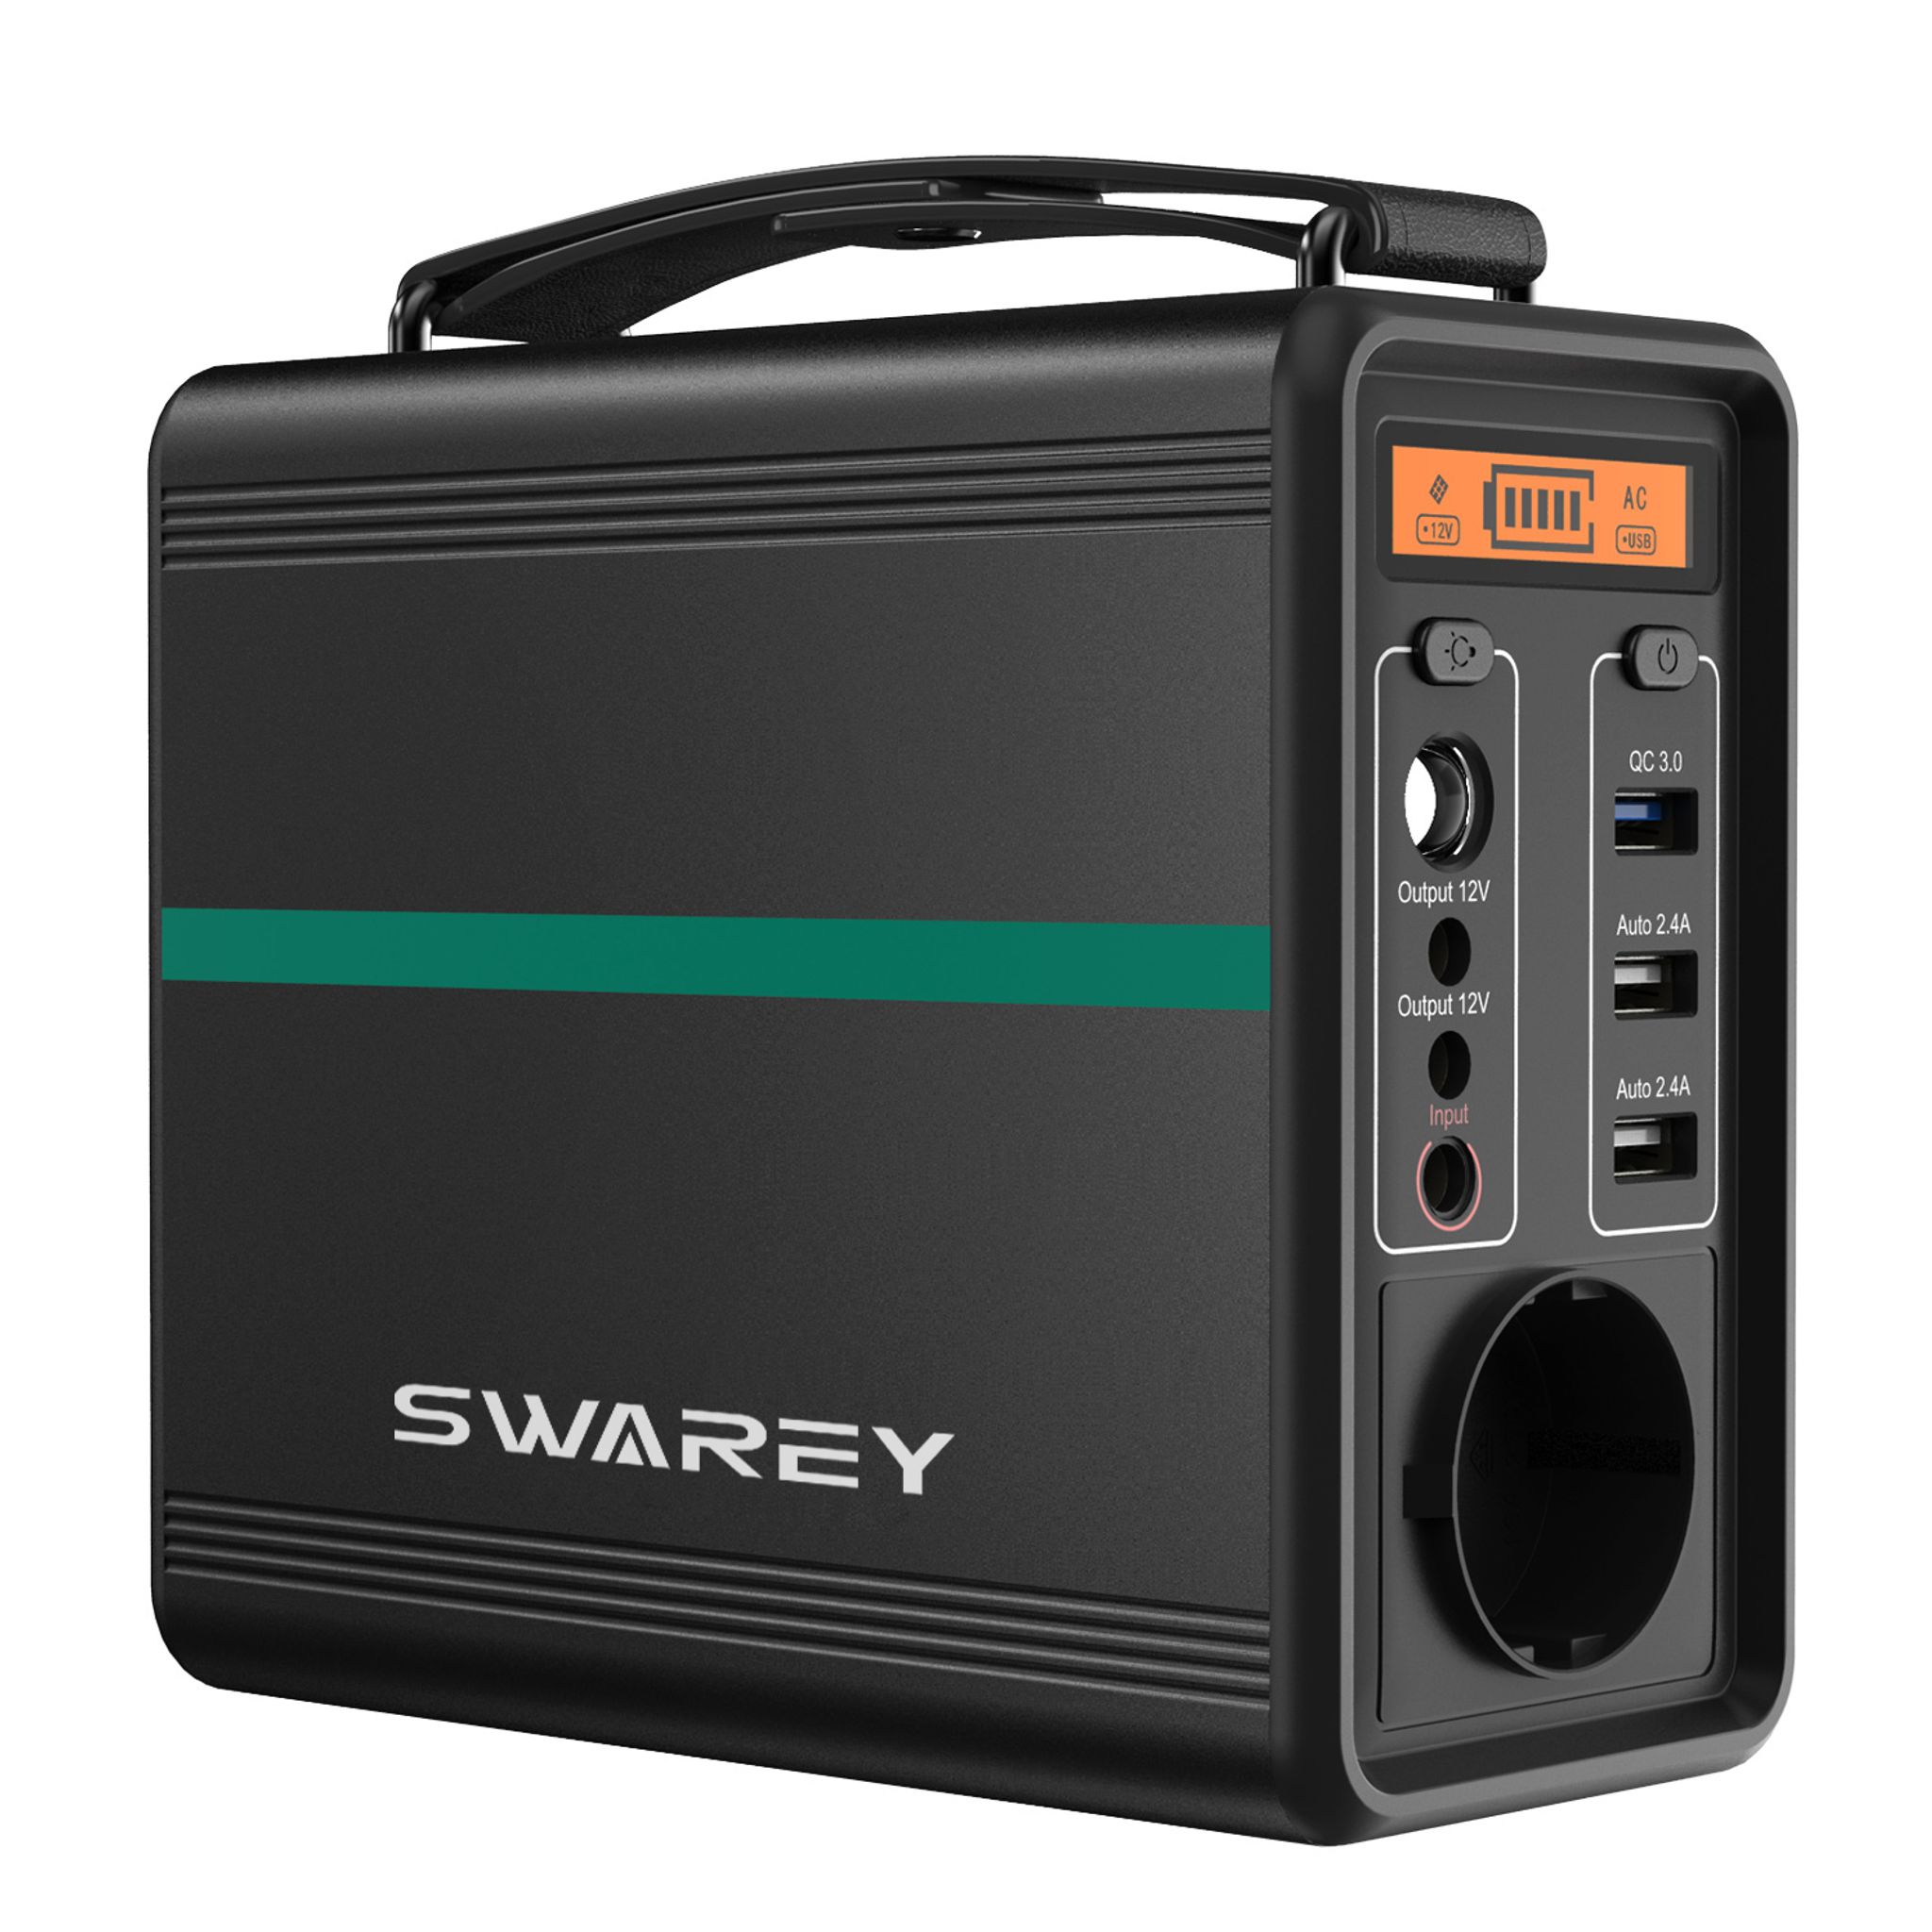 Swarey S500 Pro : avis station portable